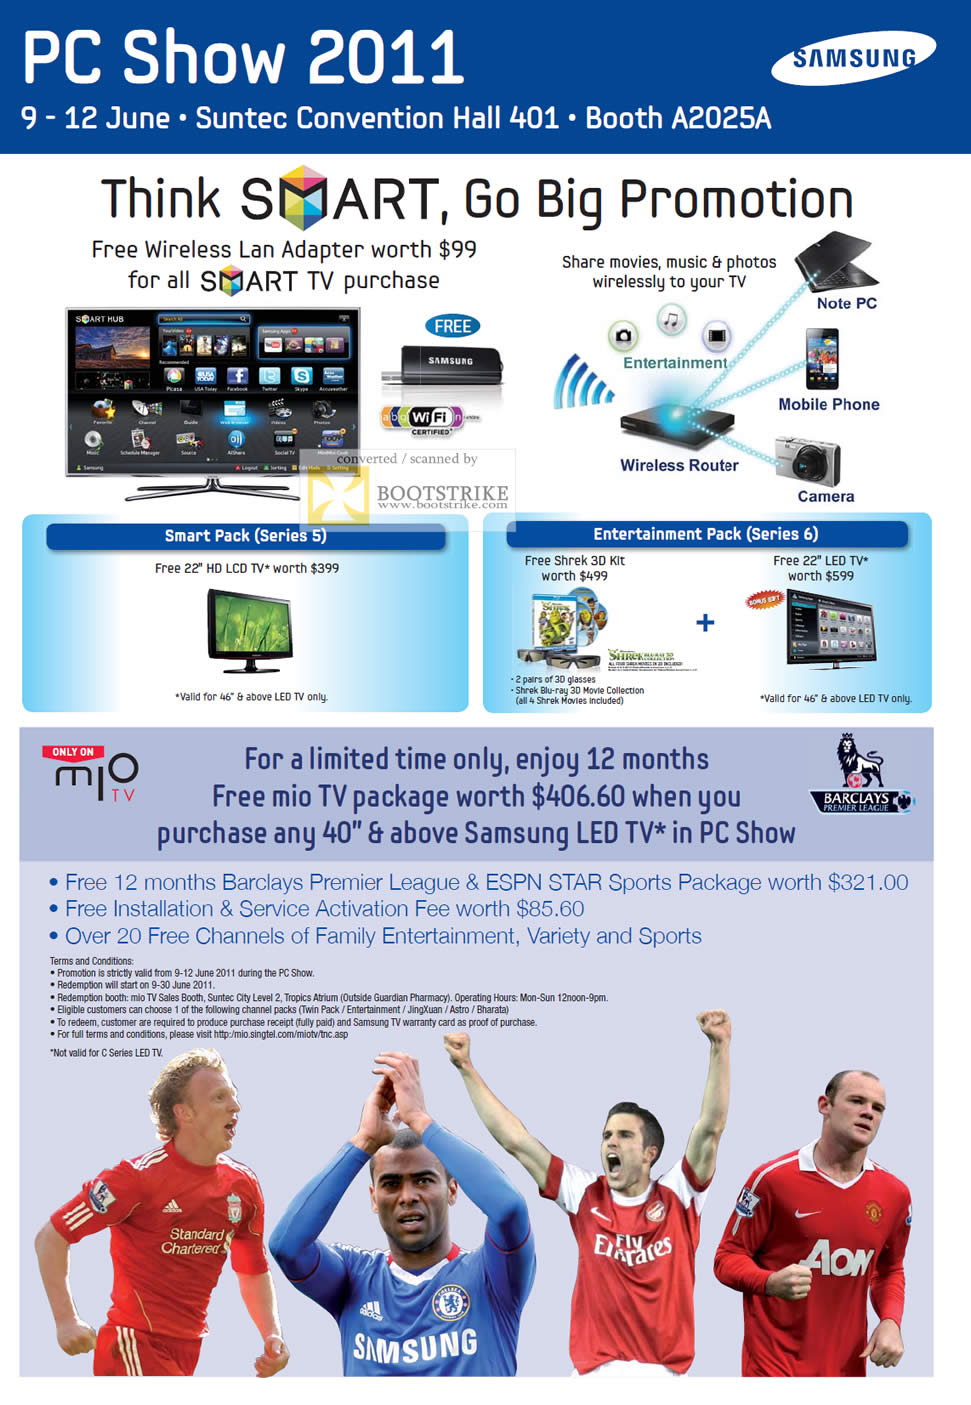 PC Show 2011 price list image brochure of Samsung Mega Discount Smart TV Series 5 Entertainment Pack Series 6